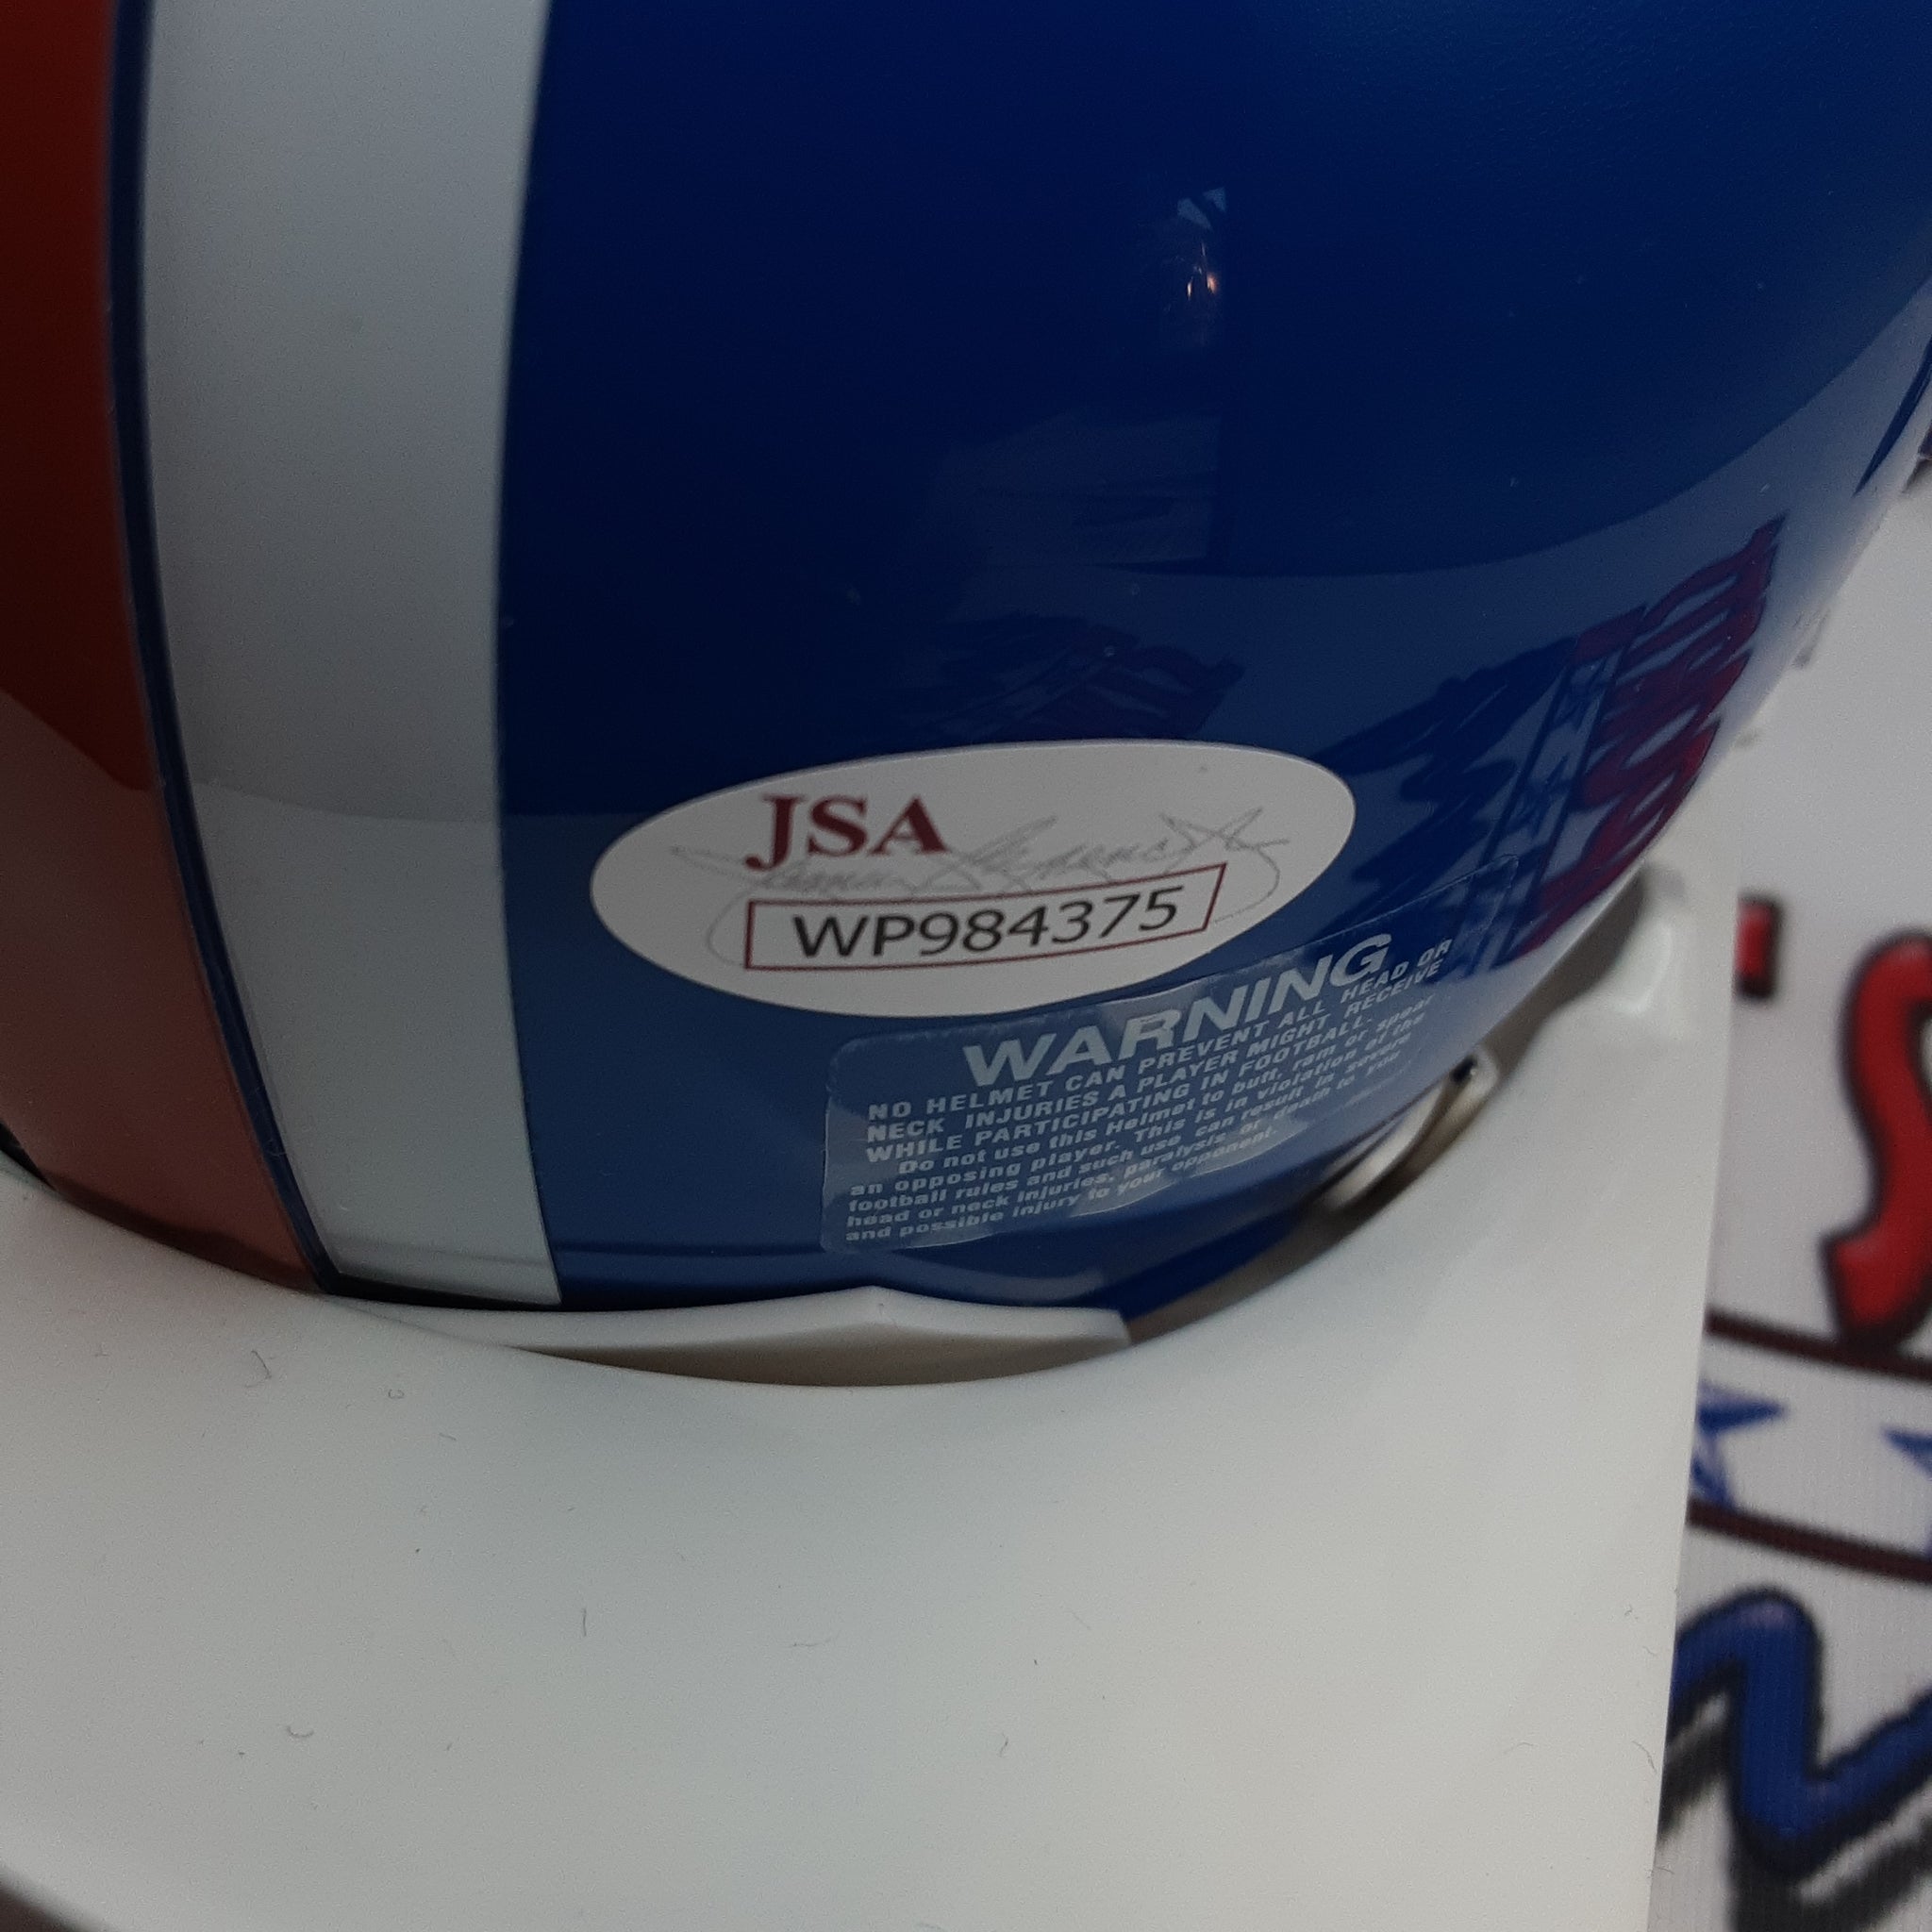 DeMaryuis Thomas Authentic Signed Autographed Mini Helmet JSA.